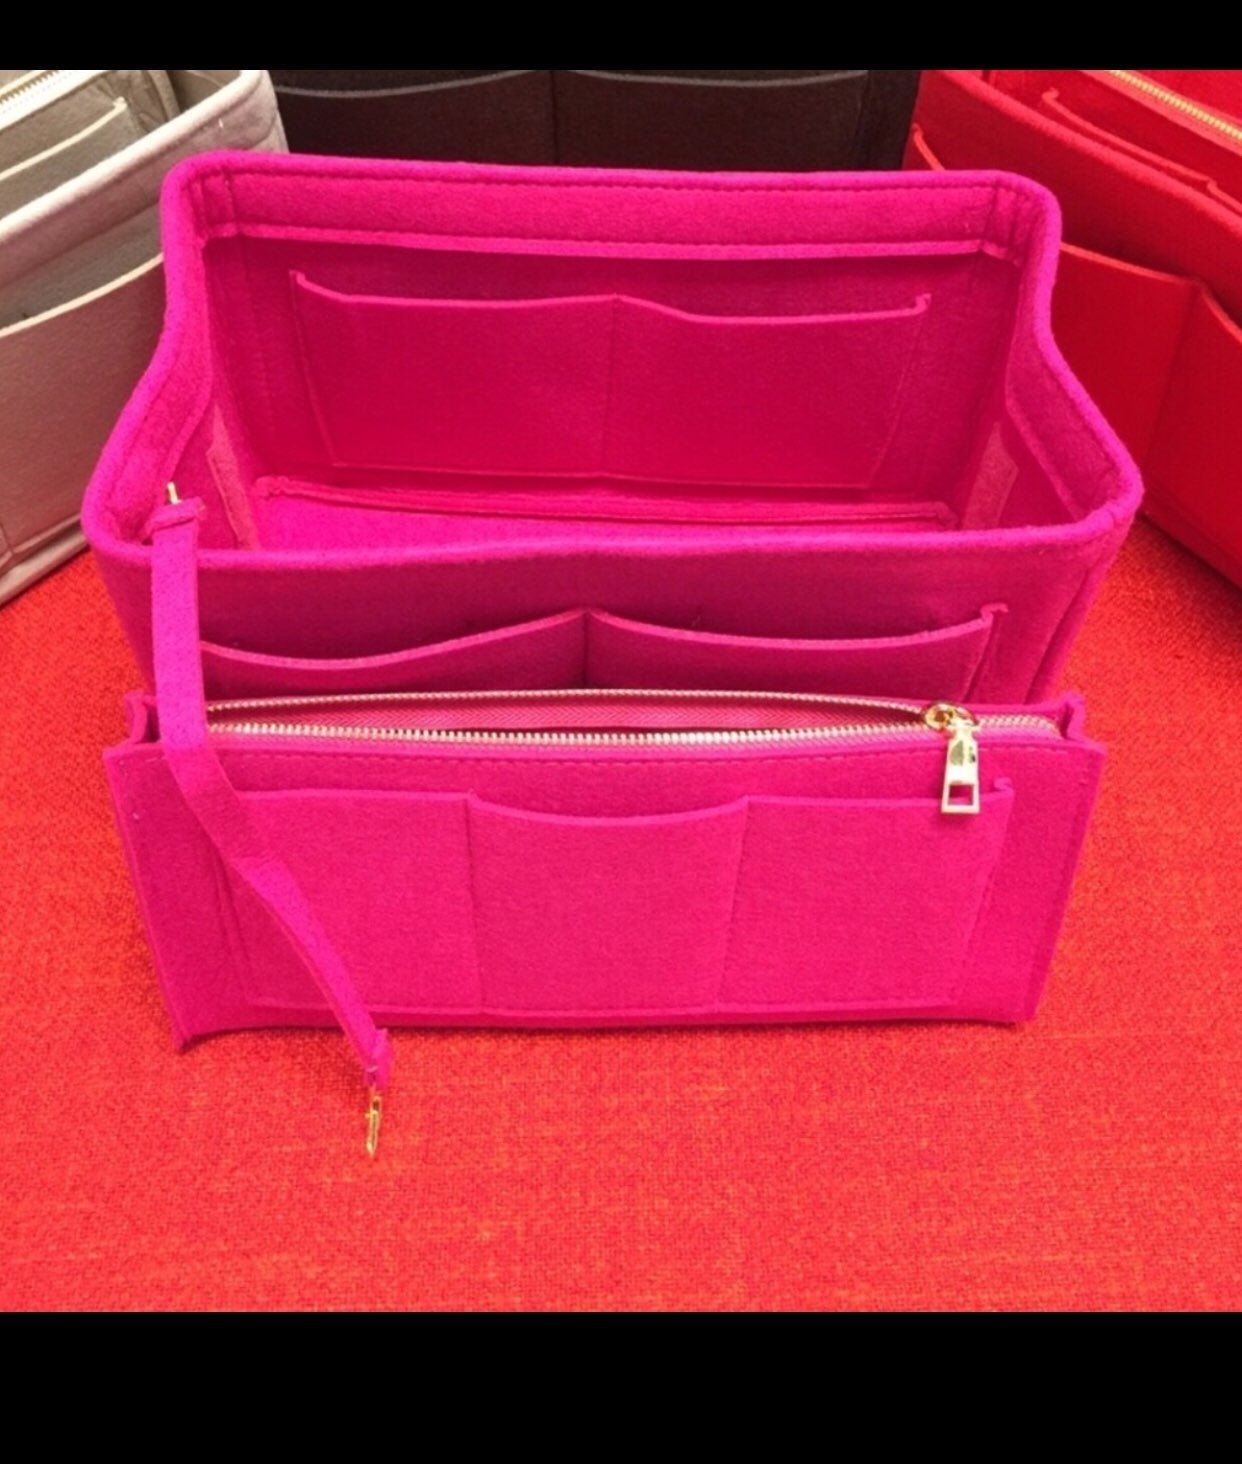 Hot pink/pivione tote bag organizer GeeOuDFSO